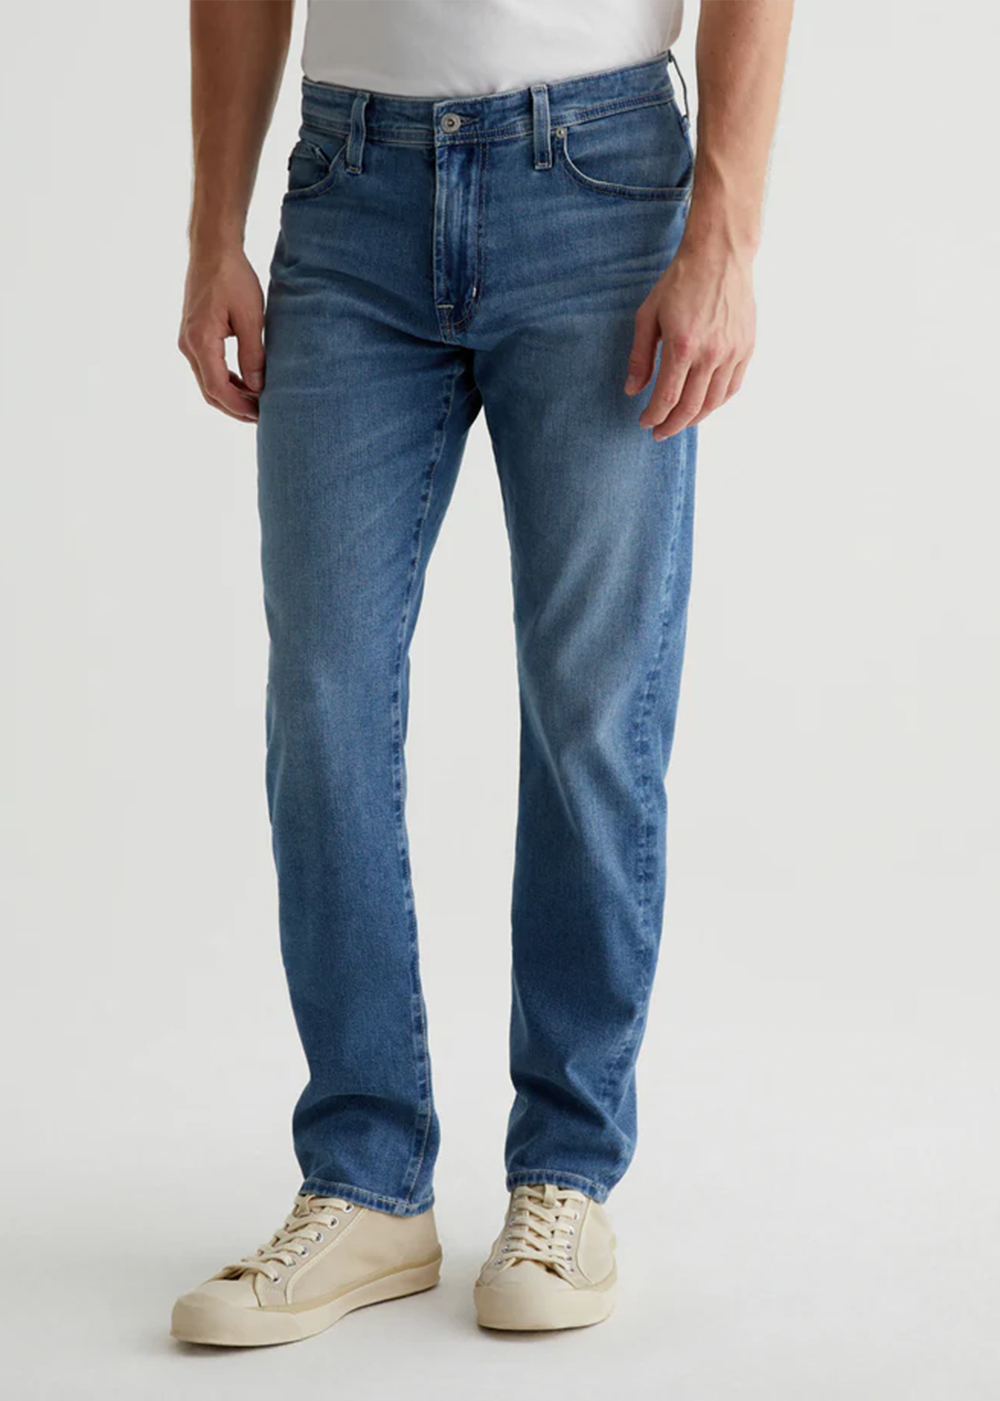 Everett Slim Straight Jean - Briny - AG Jeans Canada - Danali - 1794HYIBRNY